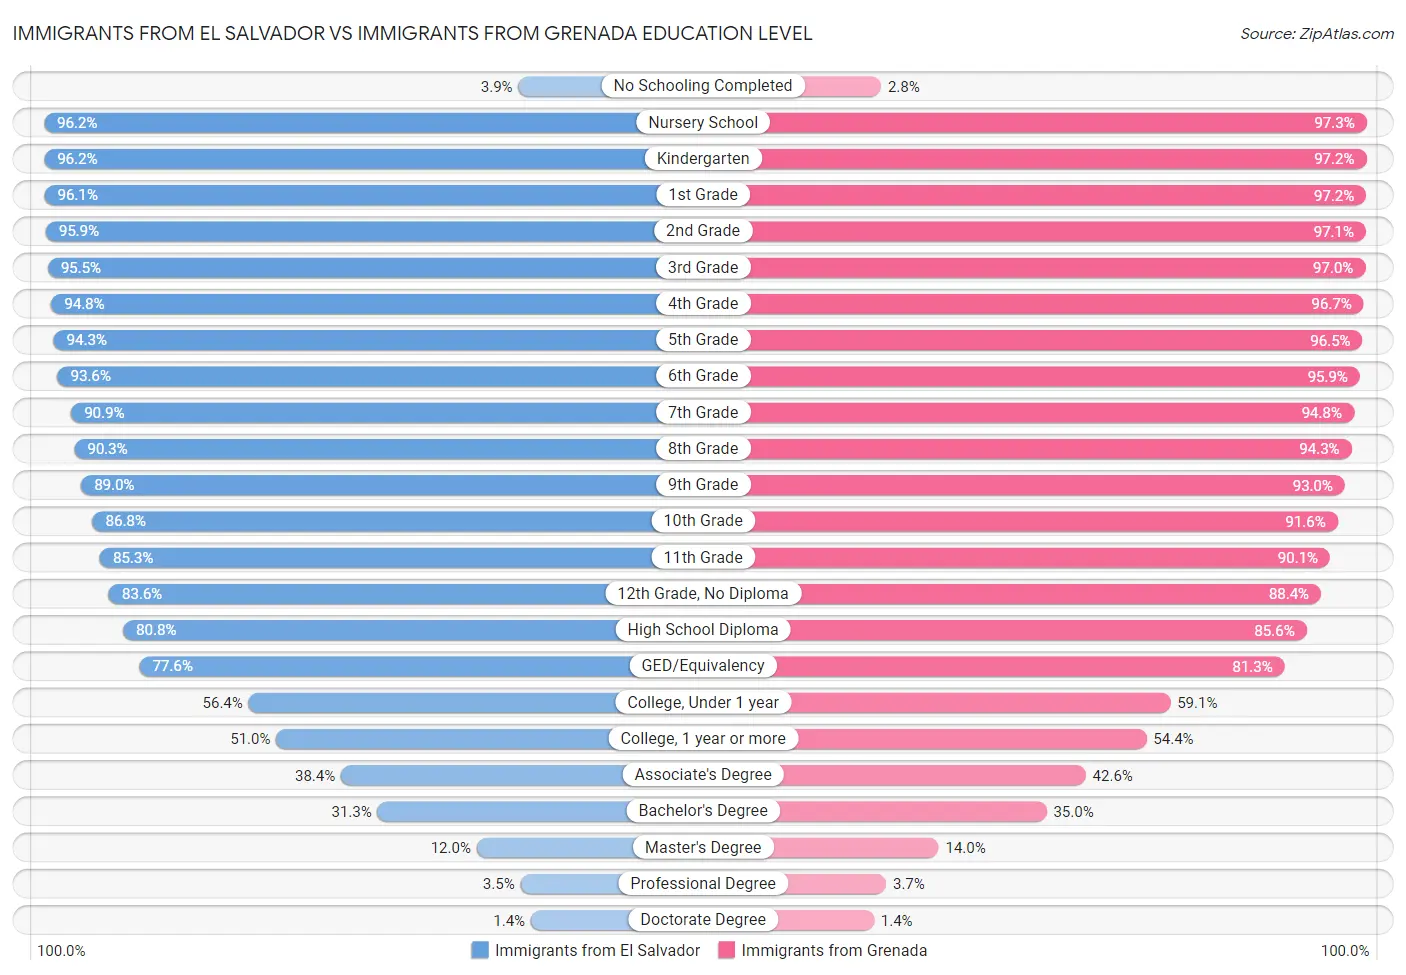 Immigrants from El Salvador vs Immigrants from Grenada Education Level